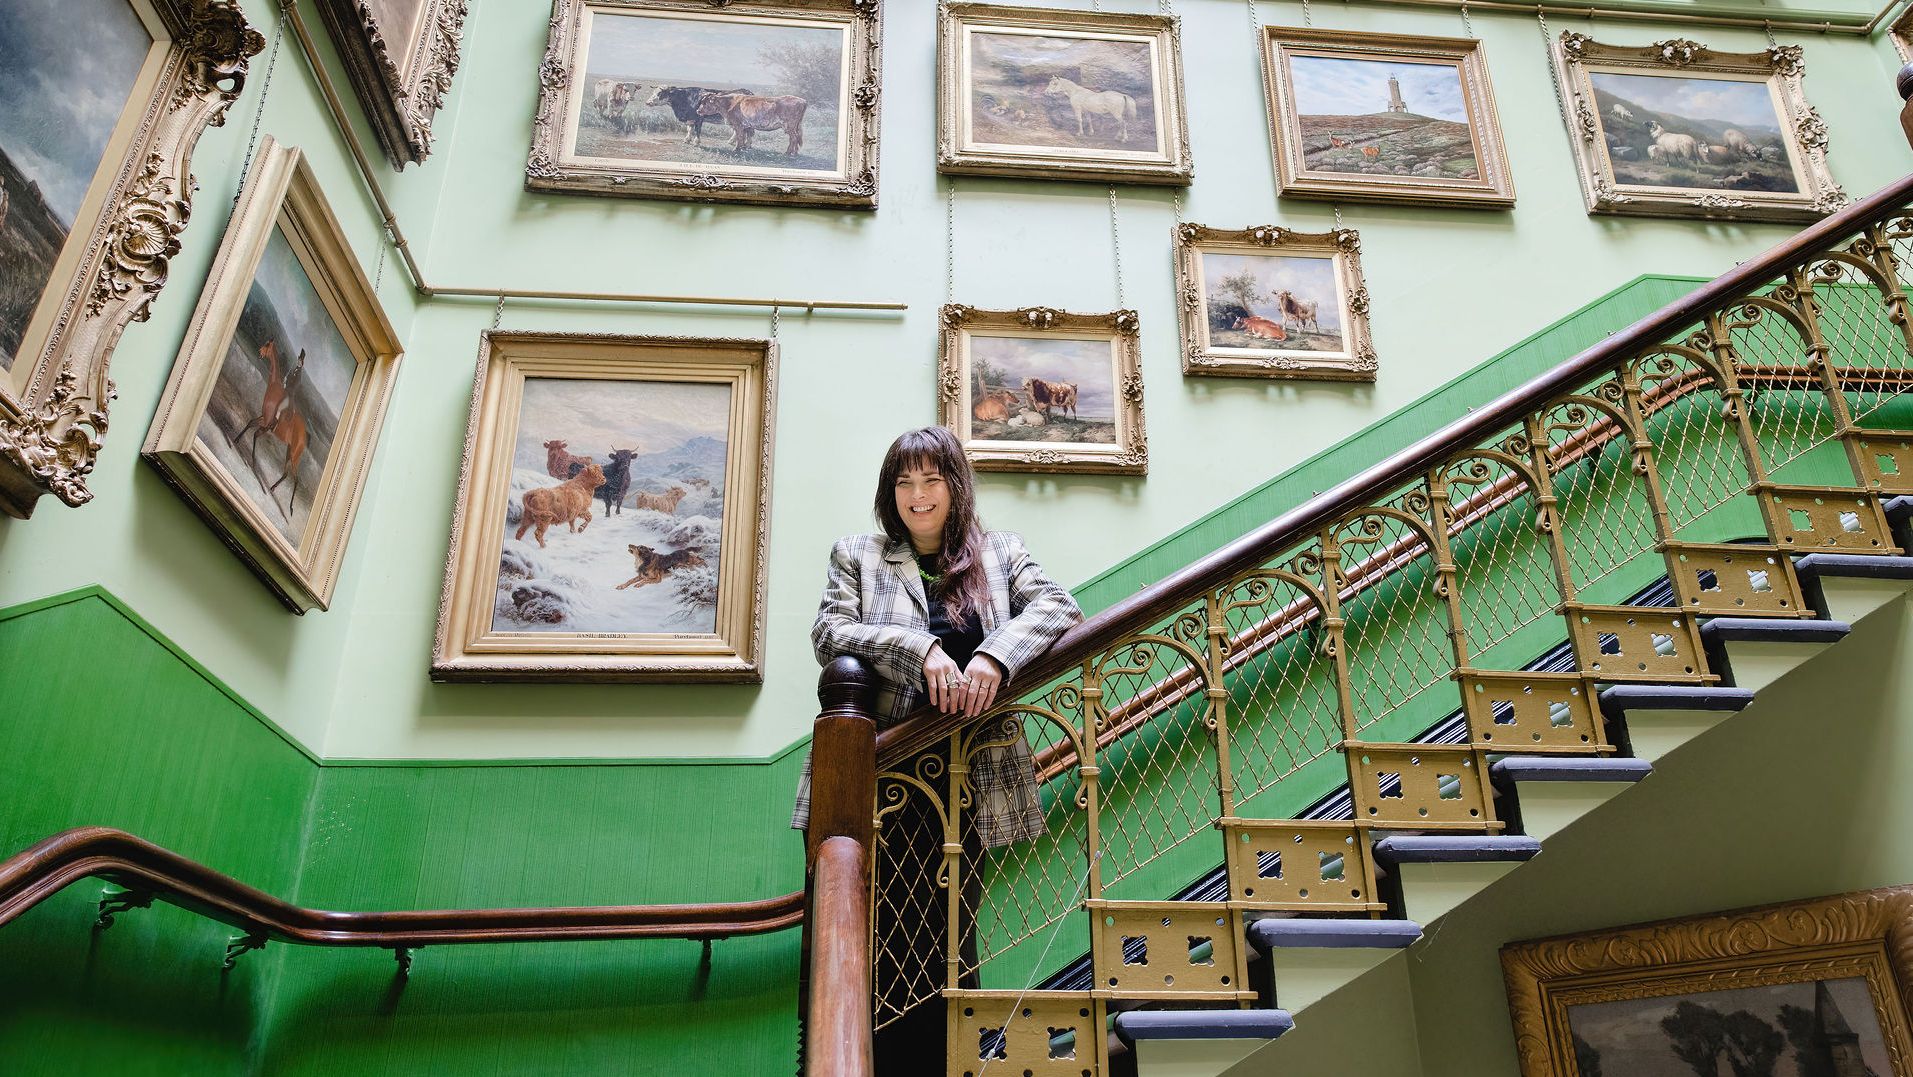 Rebecca Johnson at the stairwell gallery at Blackburn Museum & Art Gallery, c. Christina Davies, Fish2Photo.